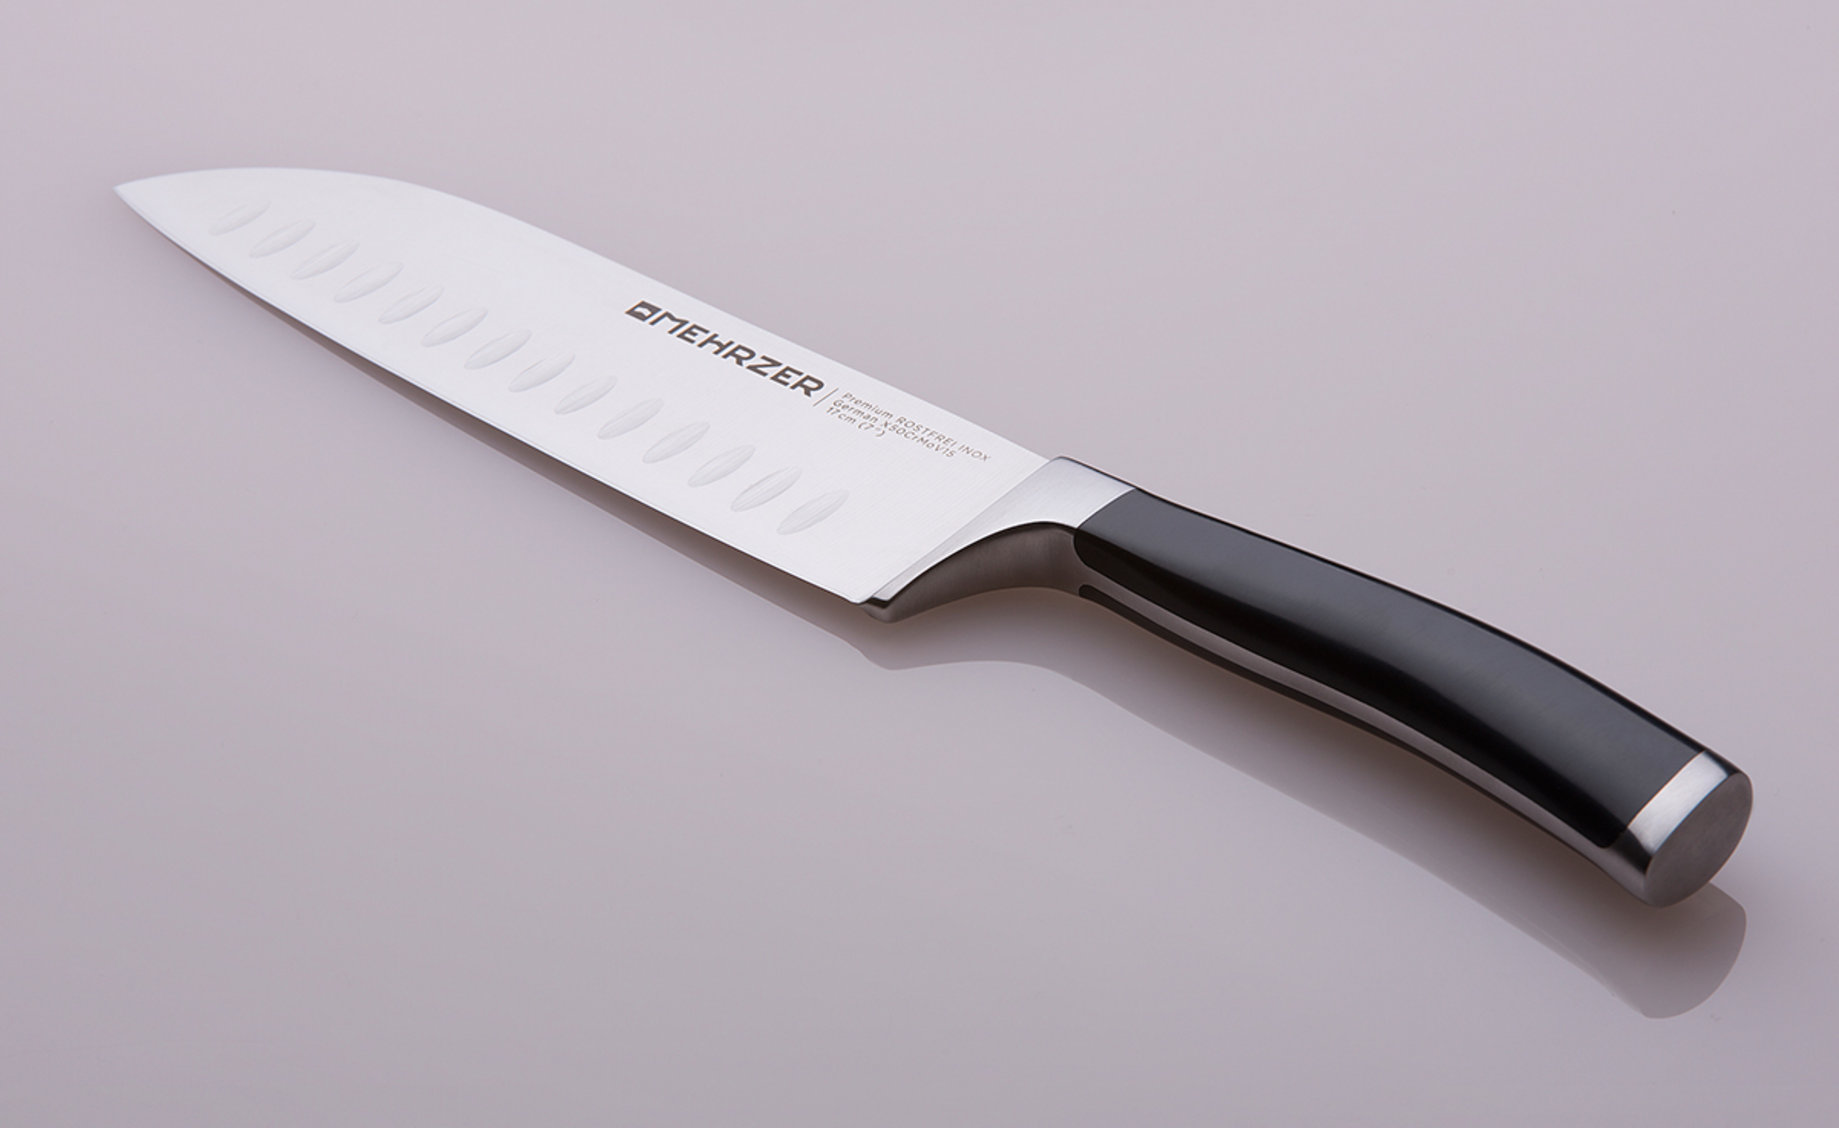 Nož Santoku 17 cm Mehrzer